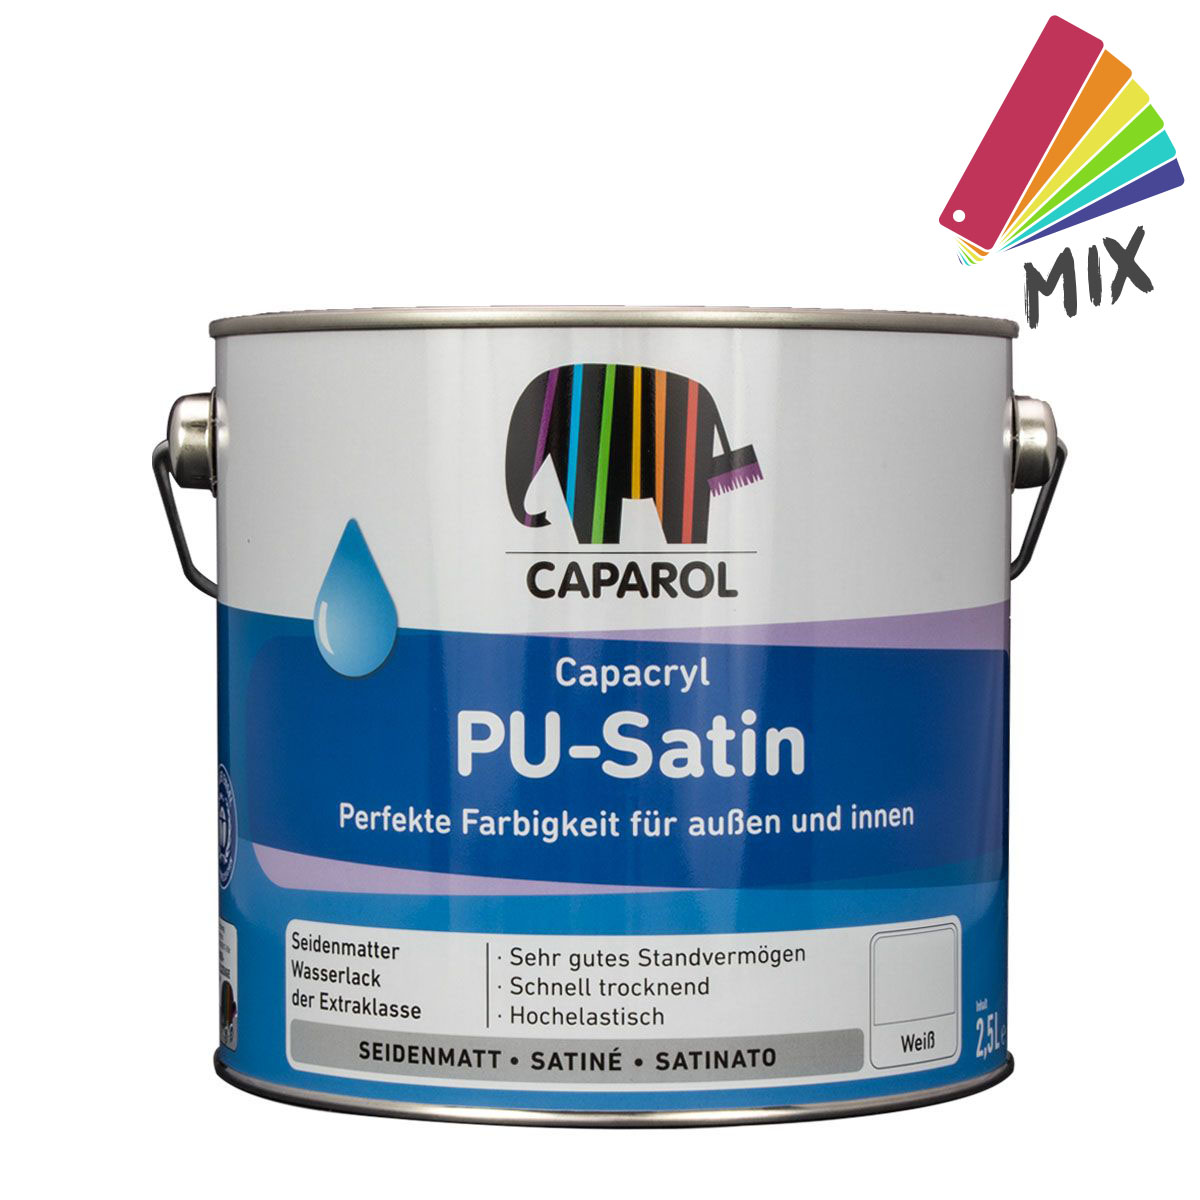 Caparol Capacryl PU-Satin 2,5L MIX PG B, seidenmatt